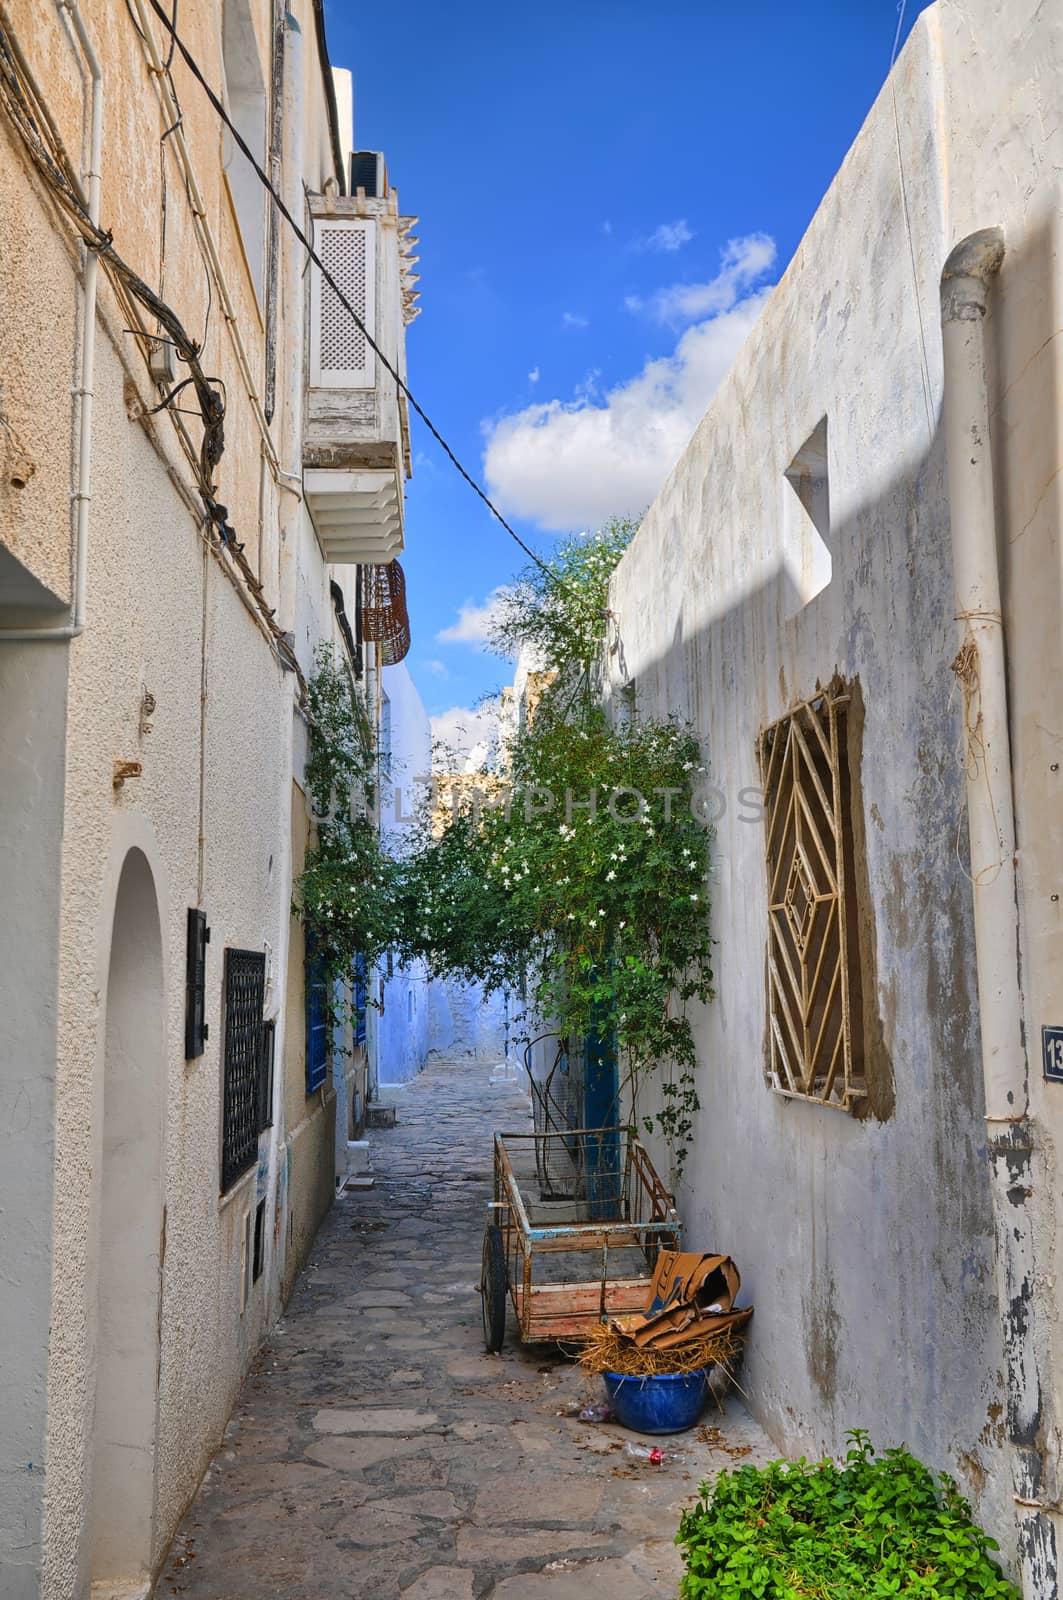 Narrow street of ancient Medina in Hammamet, Tunisia, Mediterranean Sea, Africa, HDR